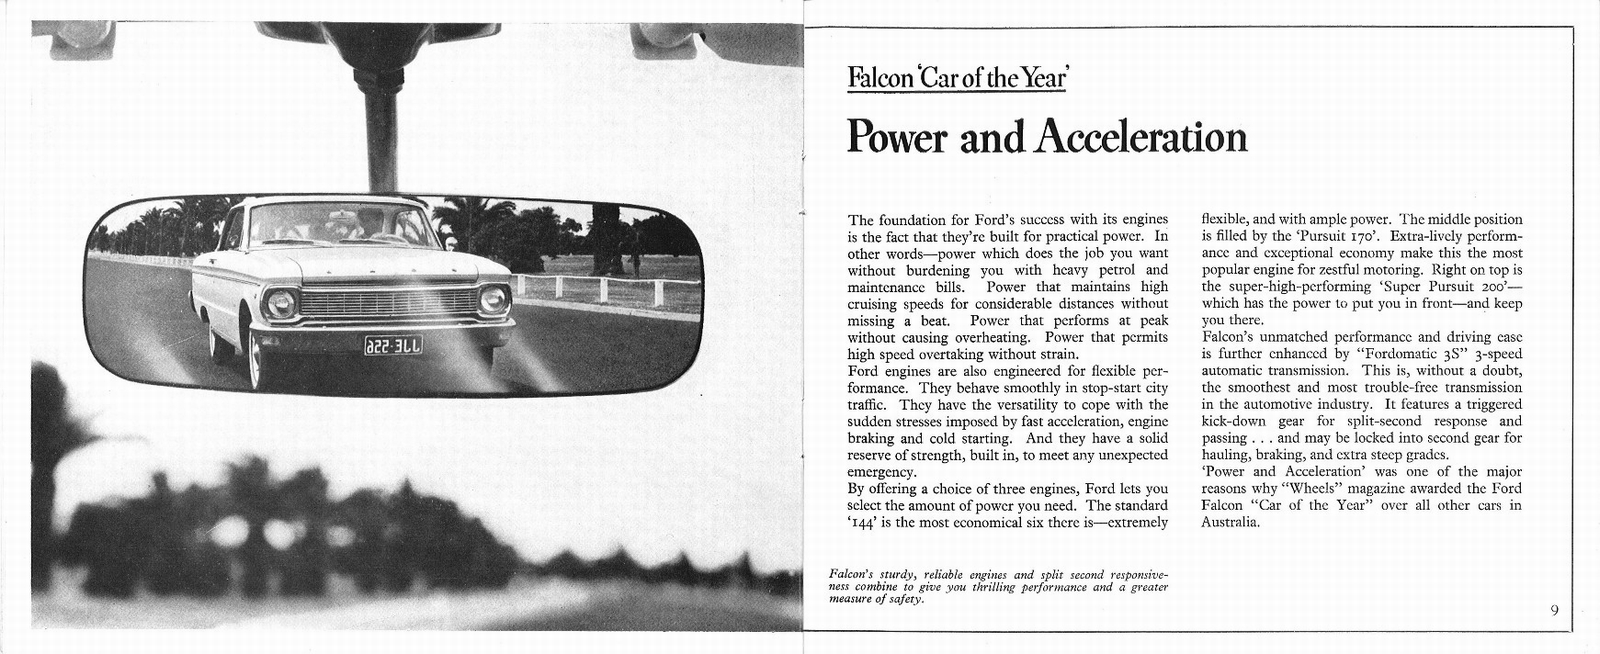 n_1965 Ford Falcon 'Car of the Year' (Aus)-08-09.jpg